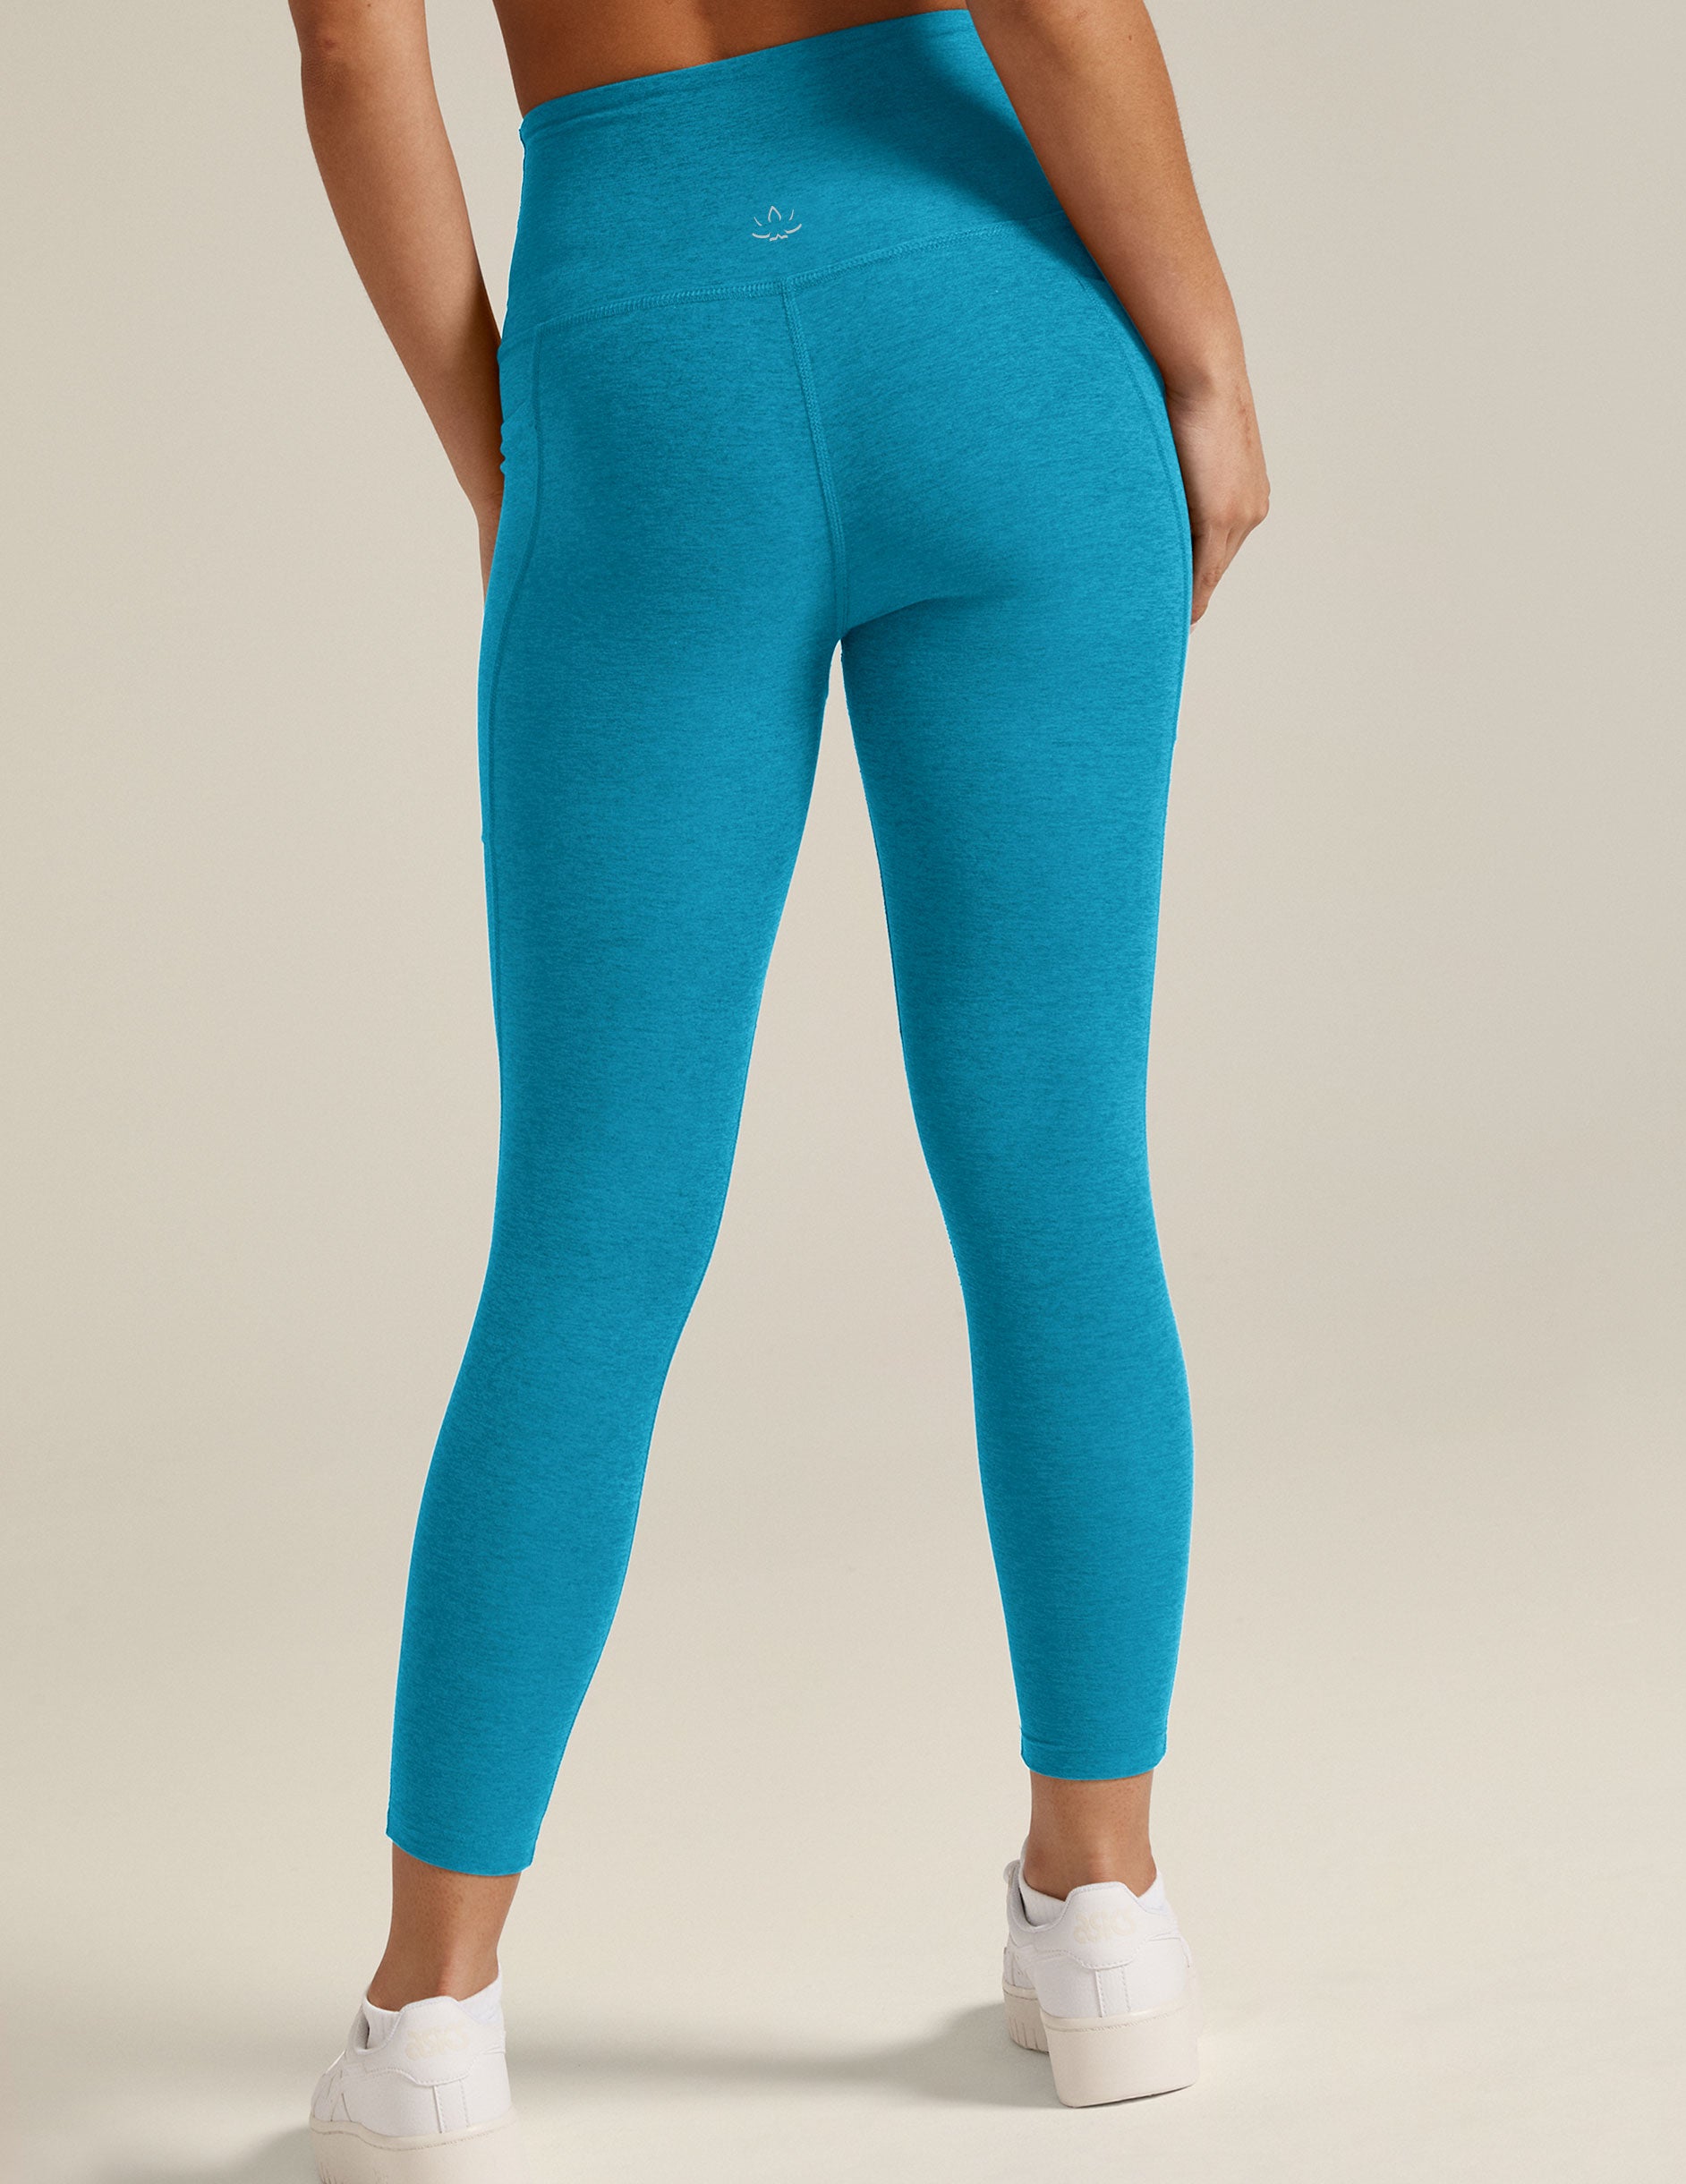 blue high-waisted capri spacedye leggings with side pockets. 